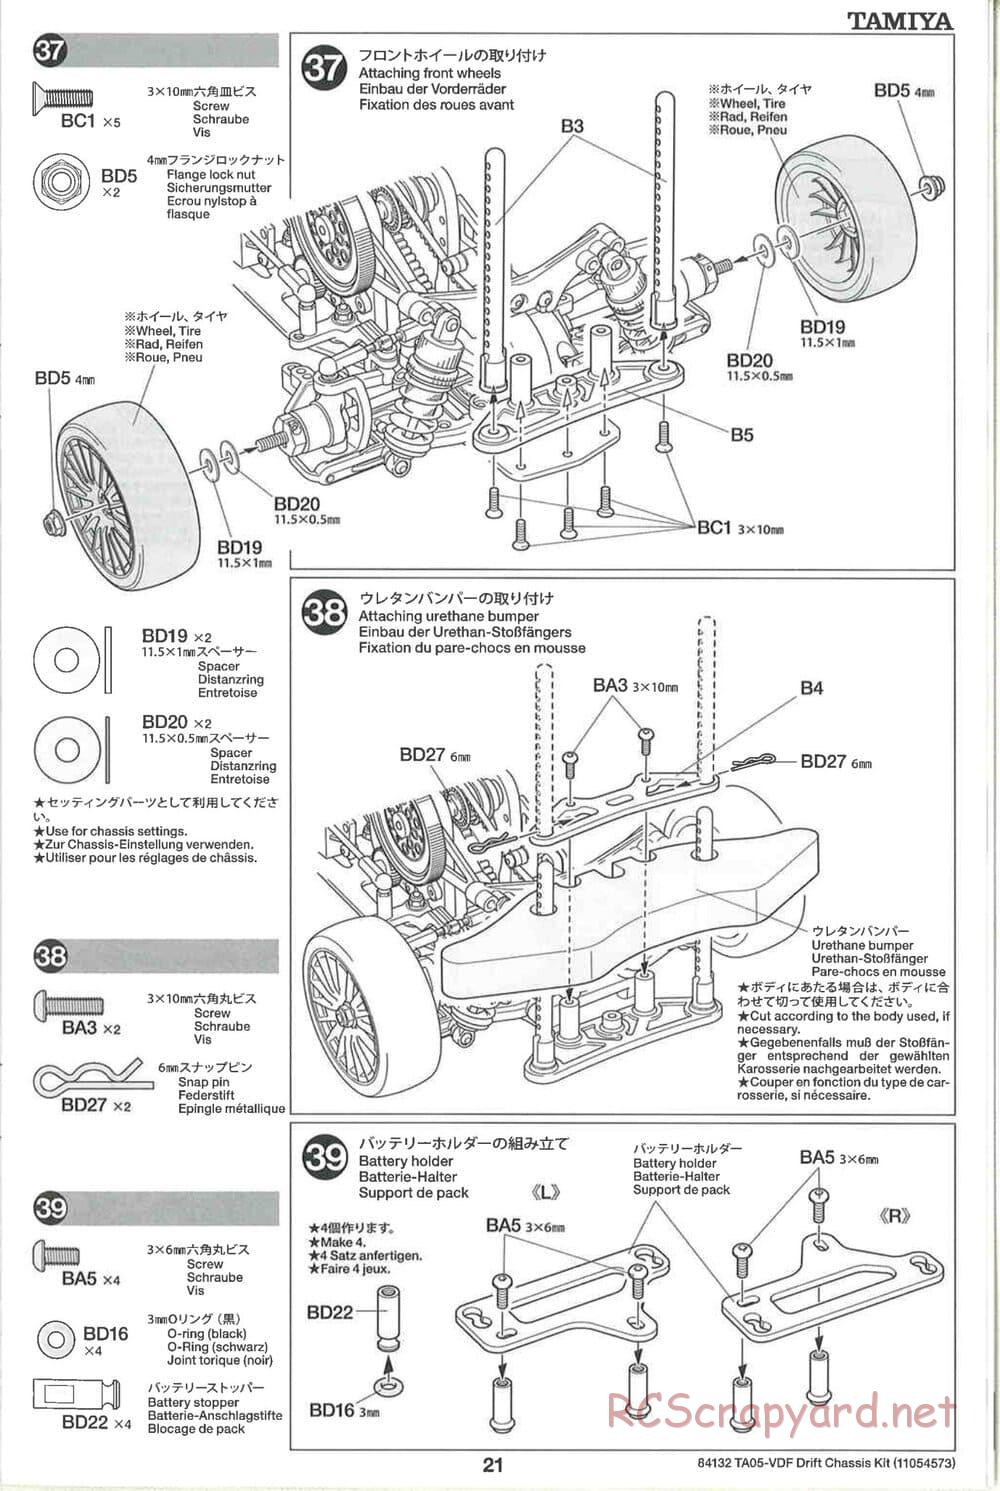 Tamiya - TA05-VDF Drift Spec Chassis - Manual - Page 21